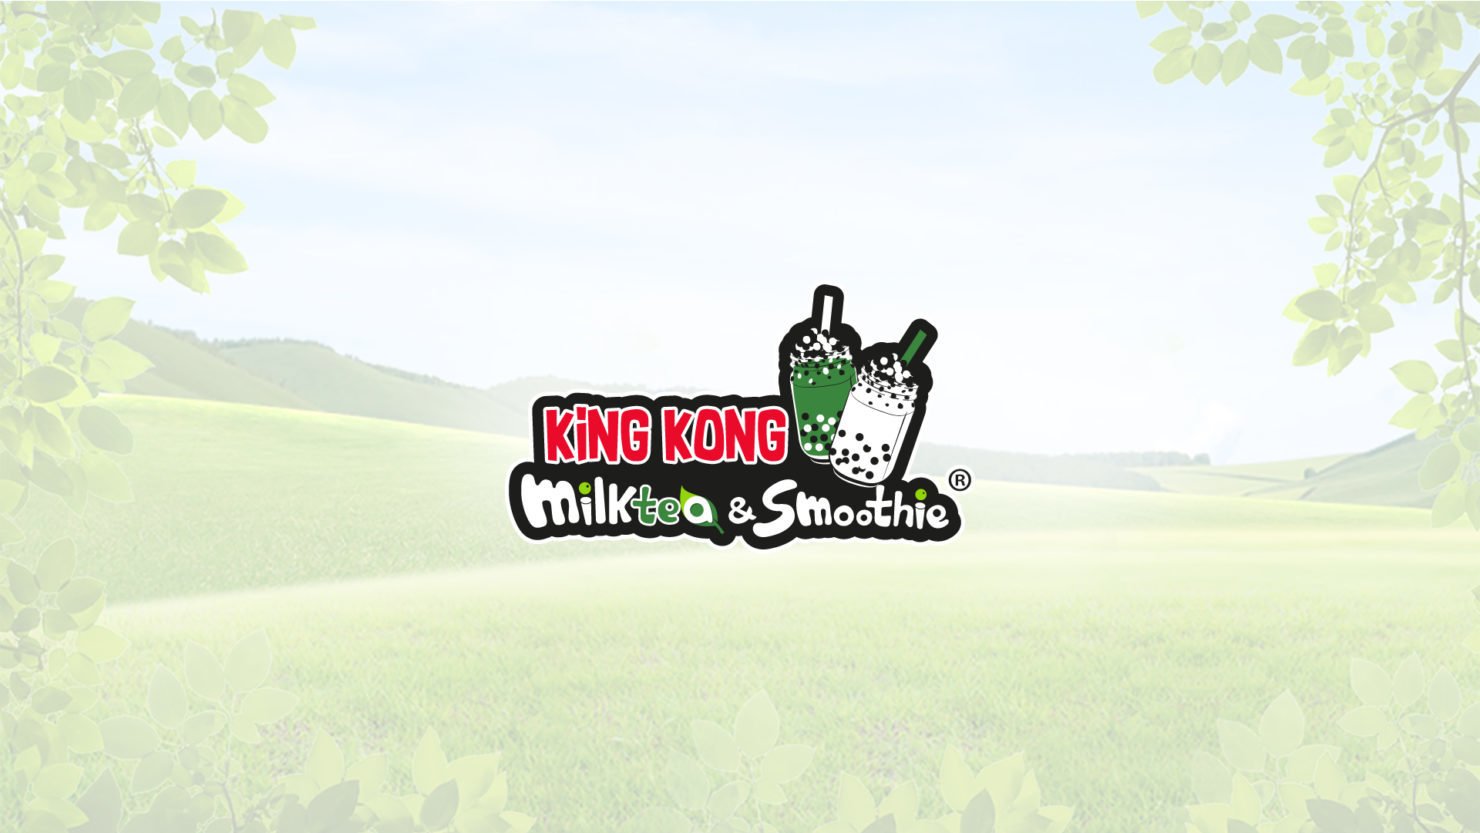 thiết kế logo, logo king kong milk tea, king kong milk tea & smoothie, logo trà sữa, logo quán trà sữa, Logo King Kong